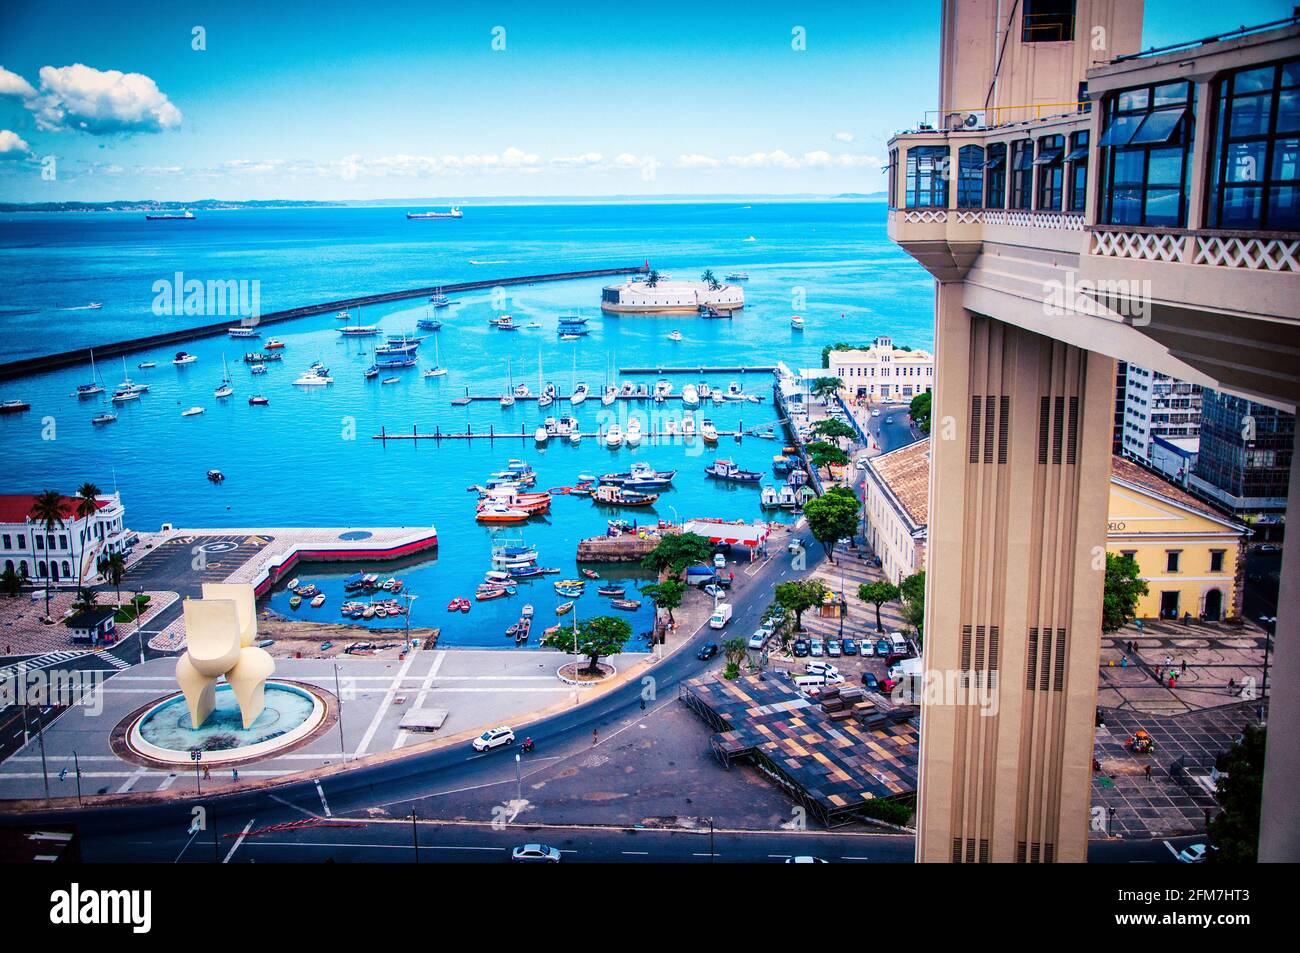 Lacerda Elevator and Central Market - Panoramaaussicht. Salvador de Bahia, Brasilien. Stockfoto